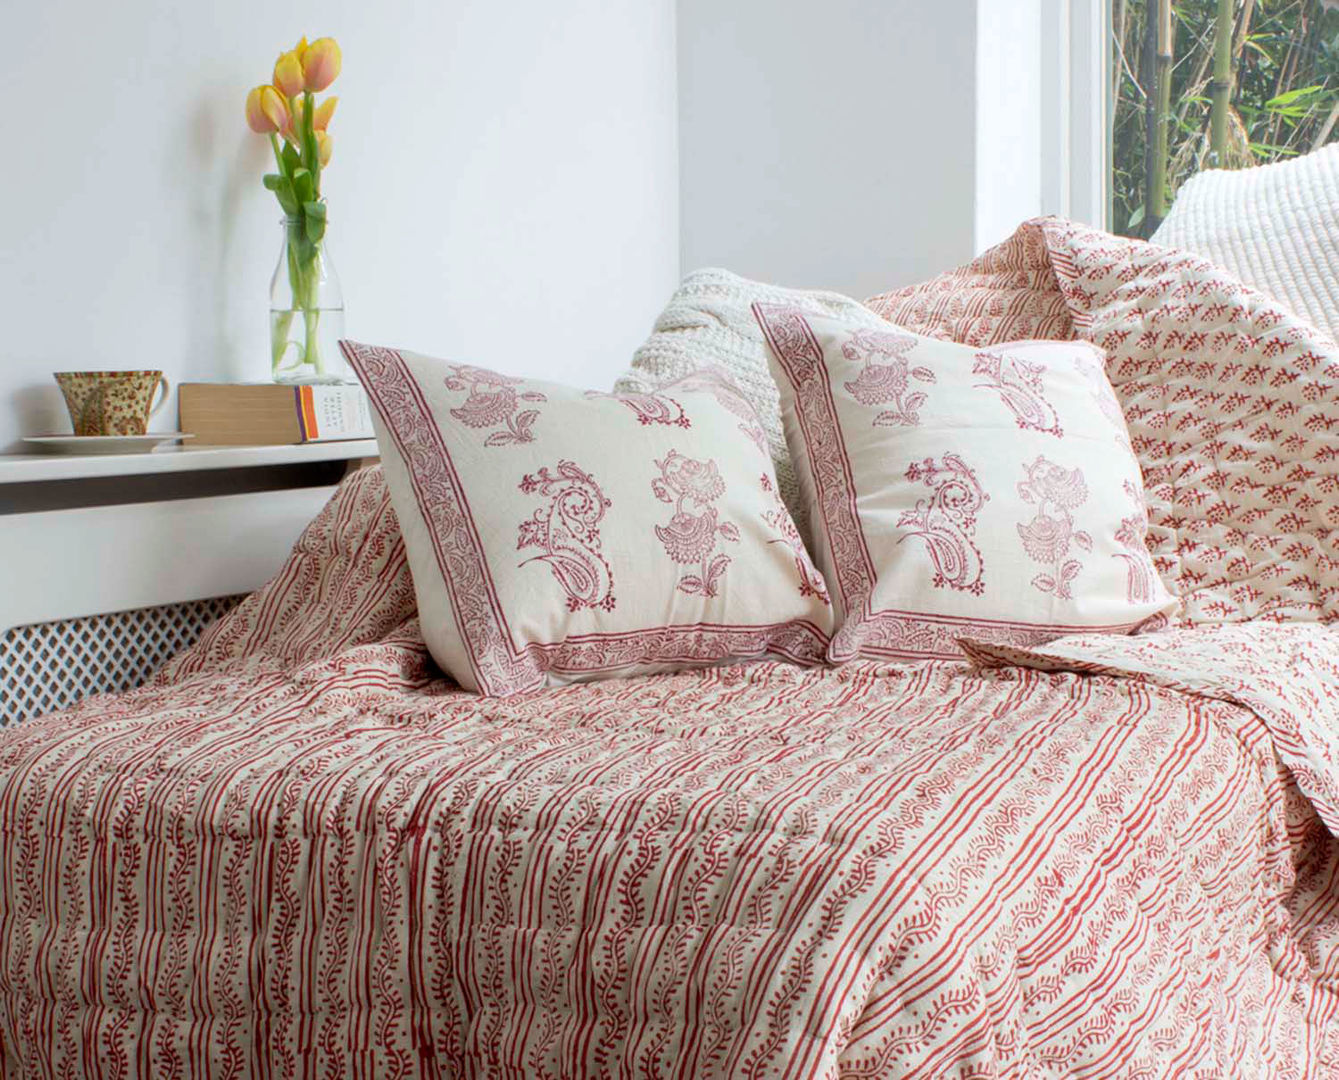 Hand Block Print Quilt Cranberry DesignRaaga Asian style bedroom Textiles